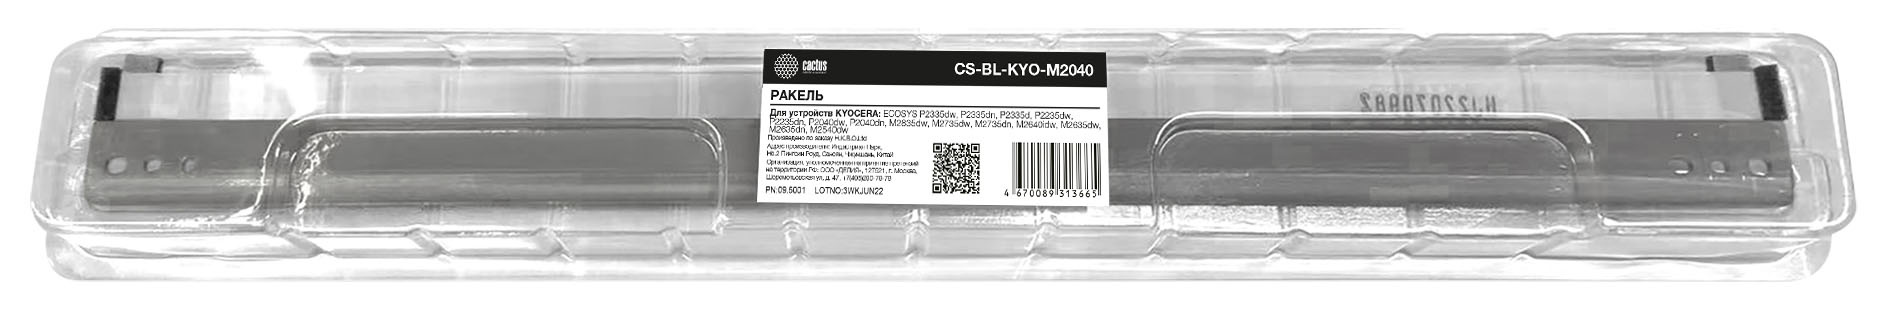 Ракель Cactus CS-BL-KYO-M2040 (DK-1150) для Kyocera Ecosys P2040/P2235/P2335/M2040/M2135/M2235/M2540/M2635/M2640/M2735 